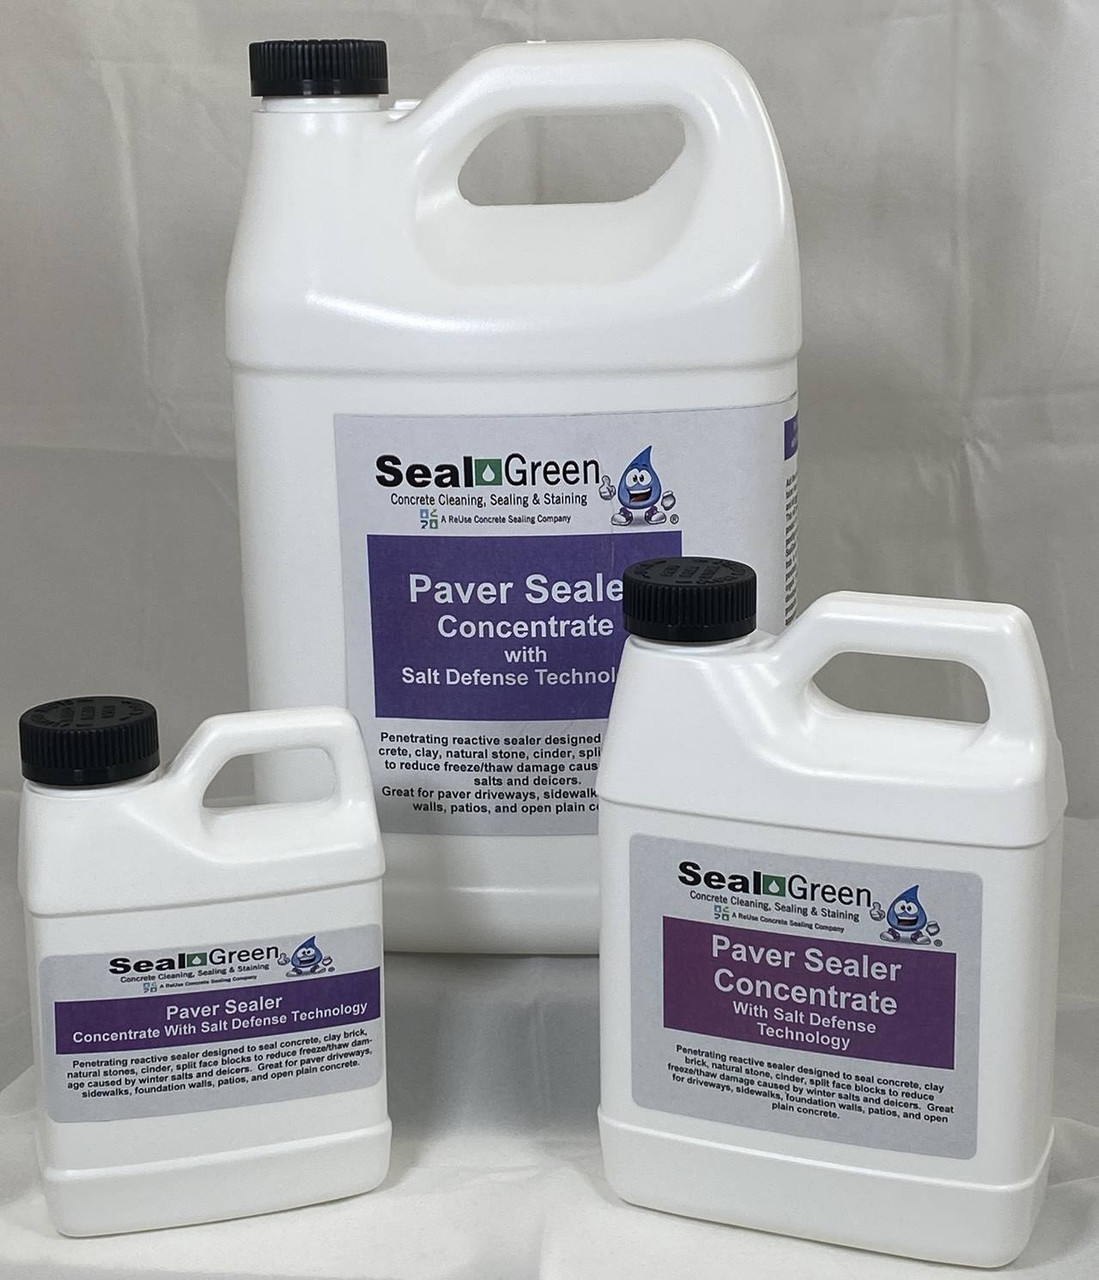 SealGreen Paver Sealer Concentrate with Salt Defense Technology